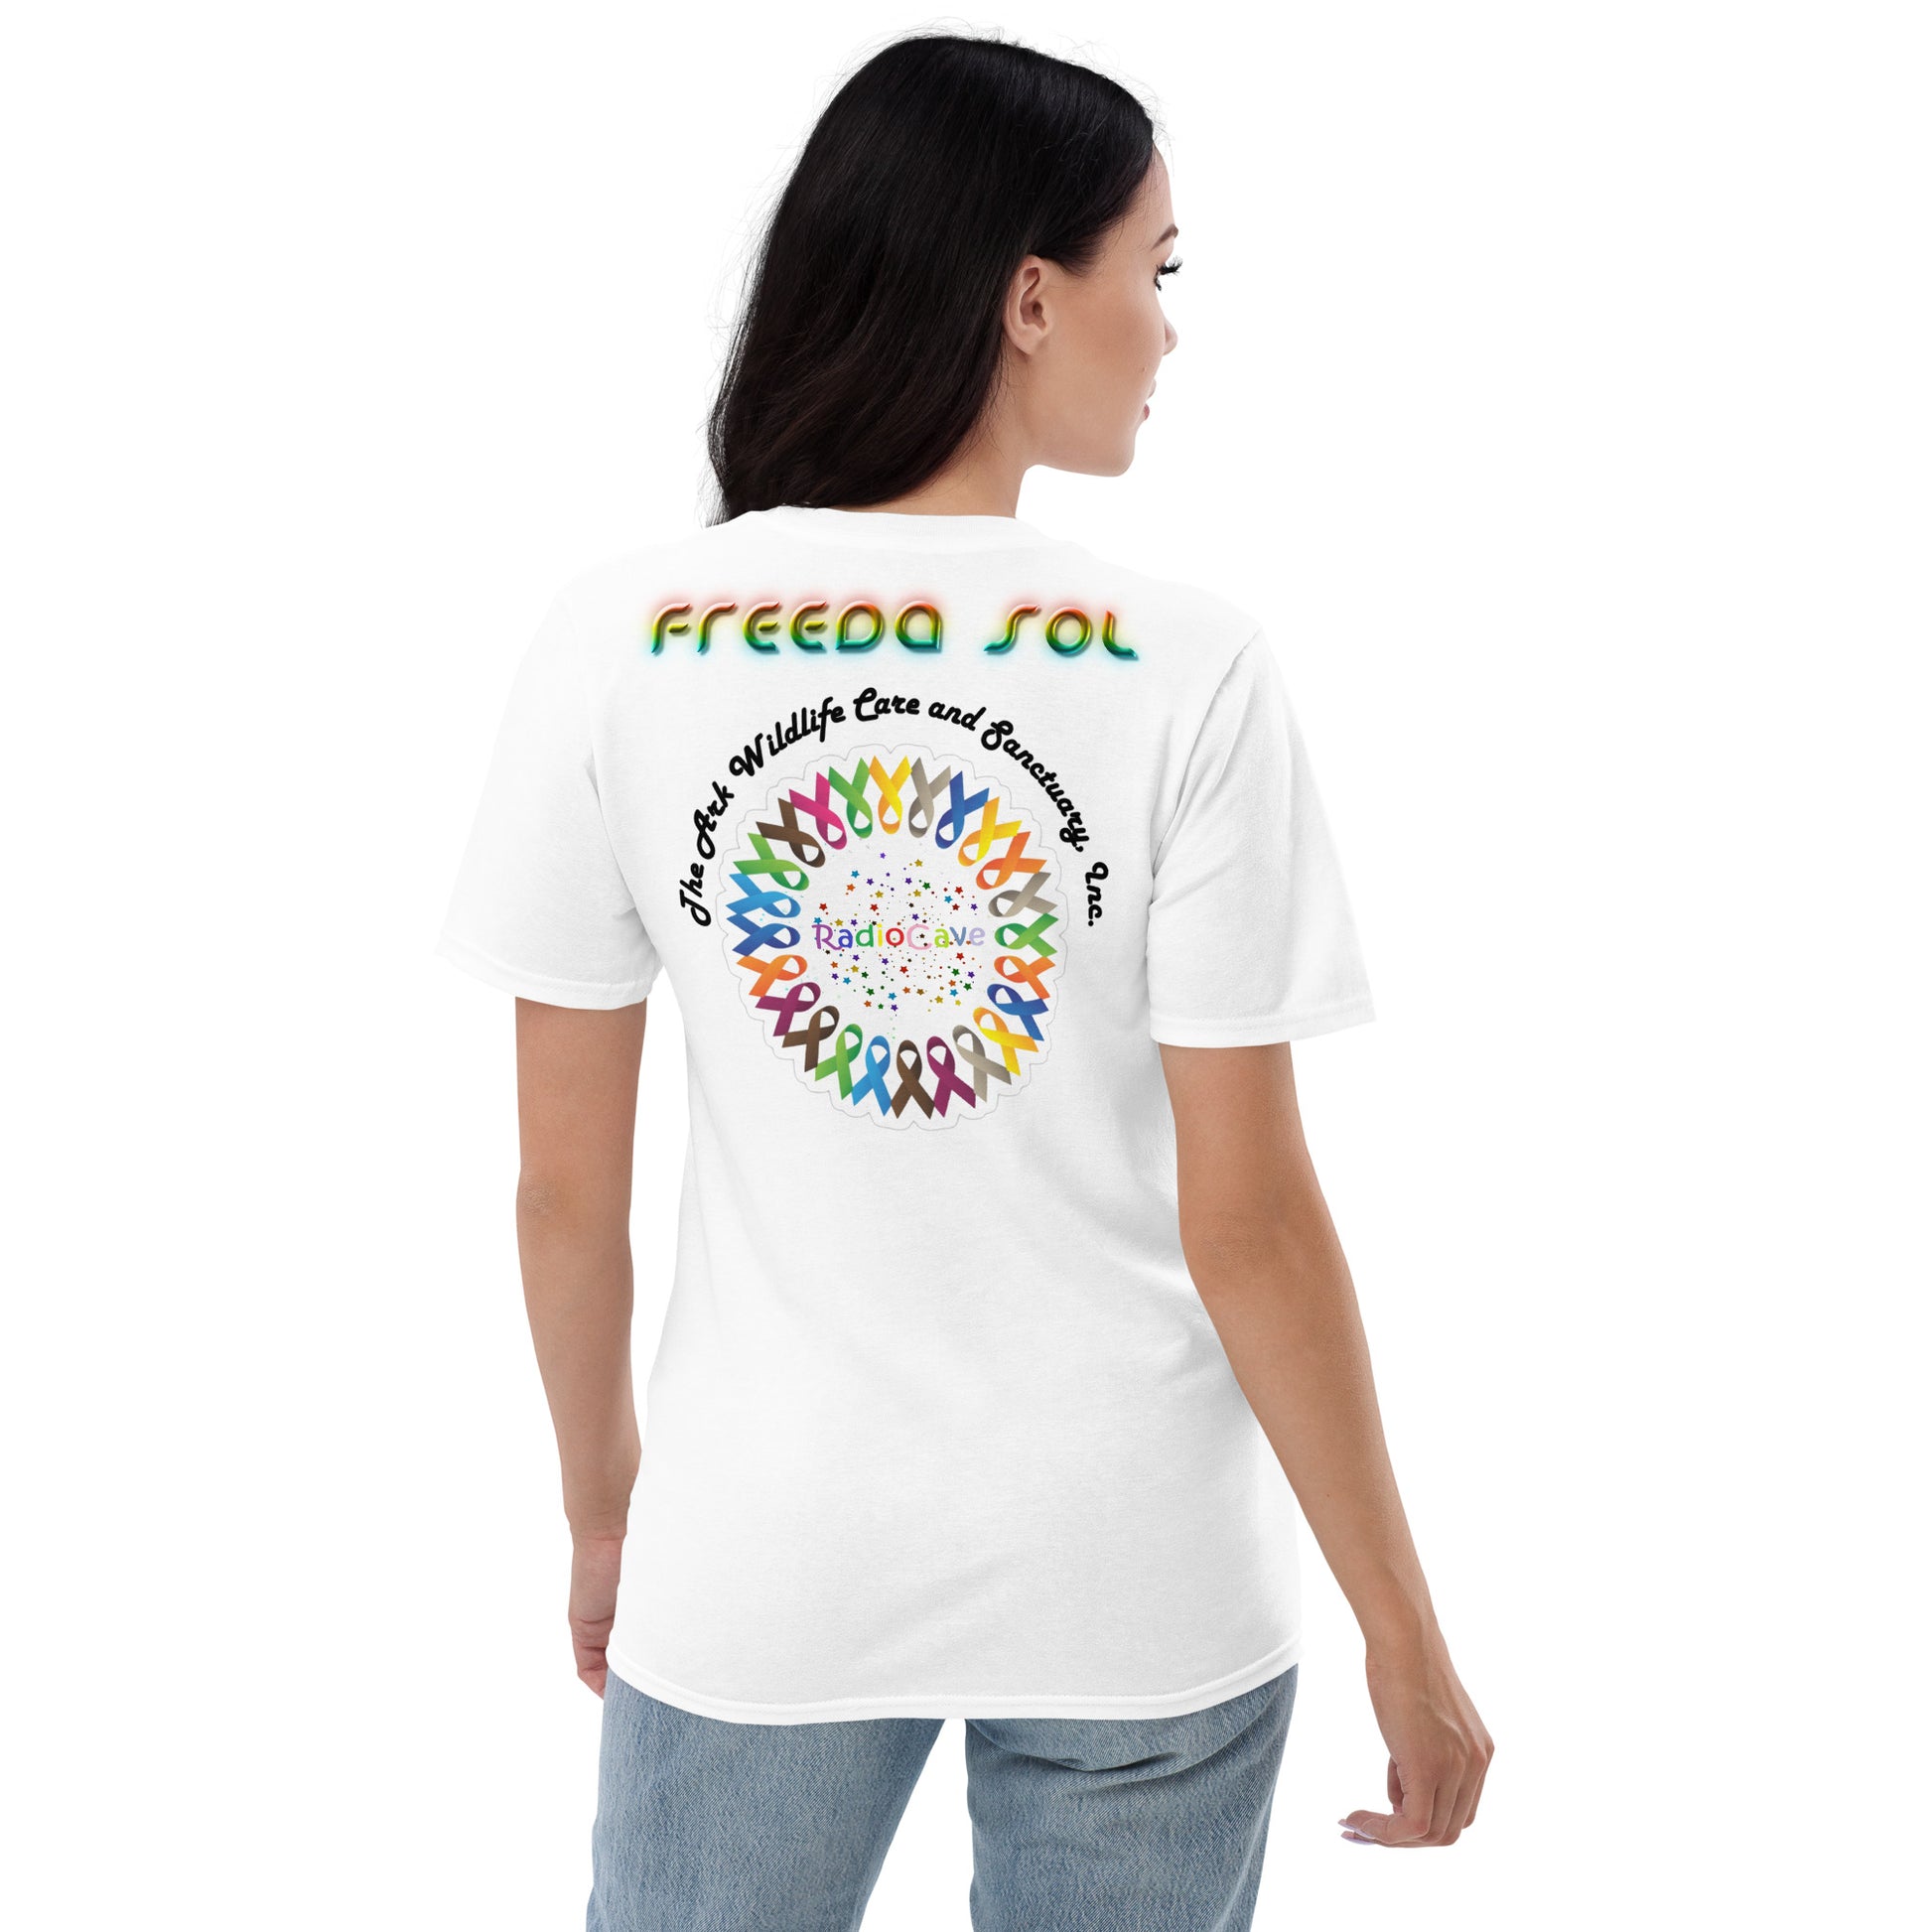 Earthdance 2023 - Freeda Sol v1 - Limited Edition Gildan - Short-Sleeve T-Shirt - The Foundation of Families